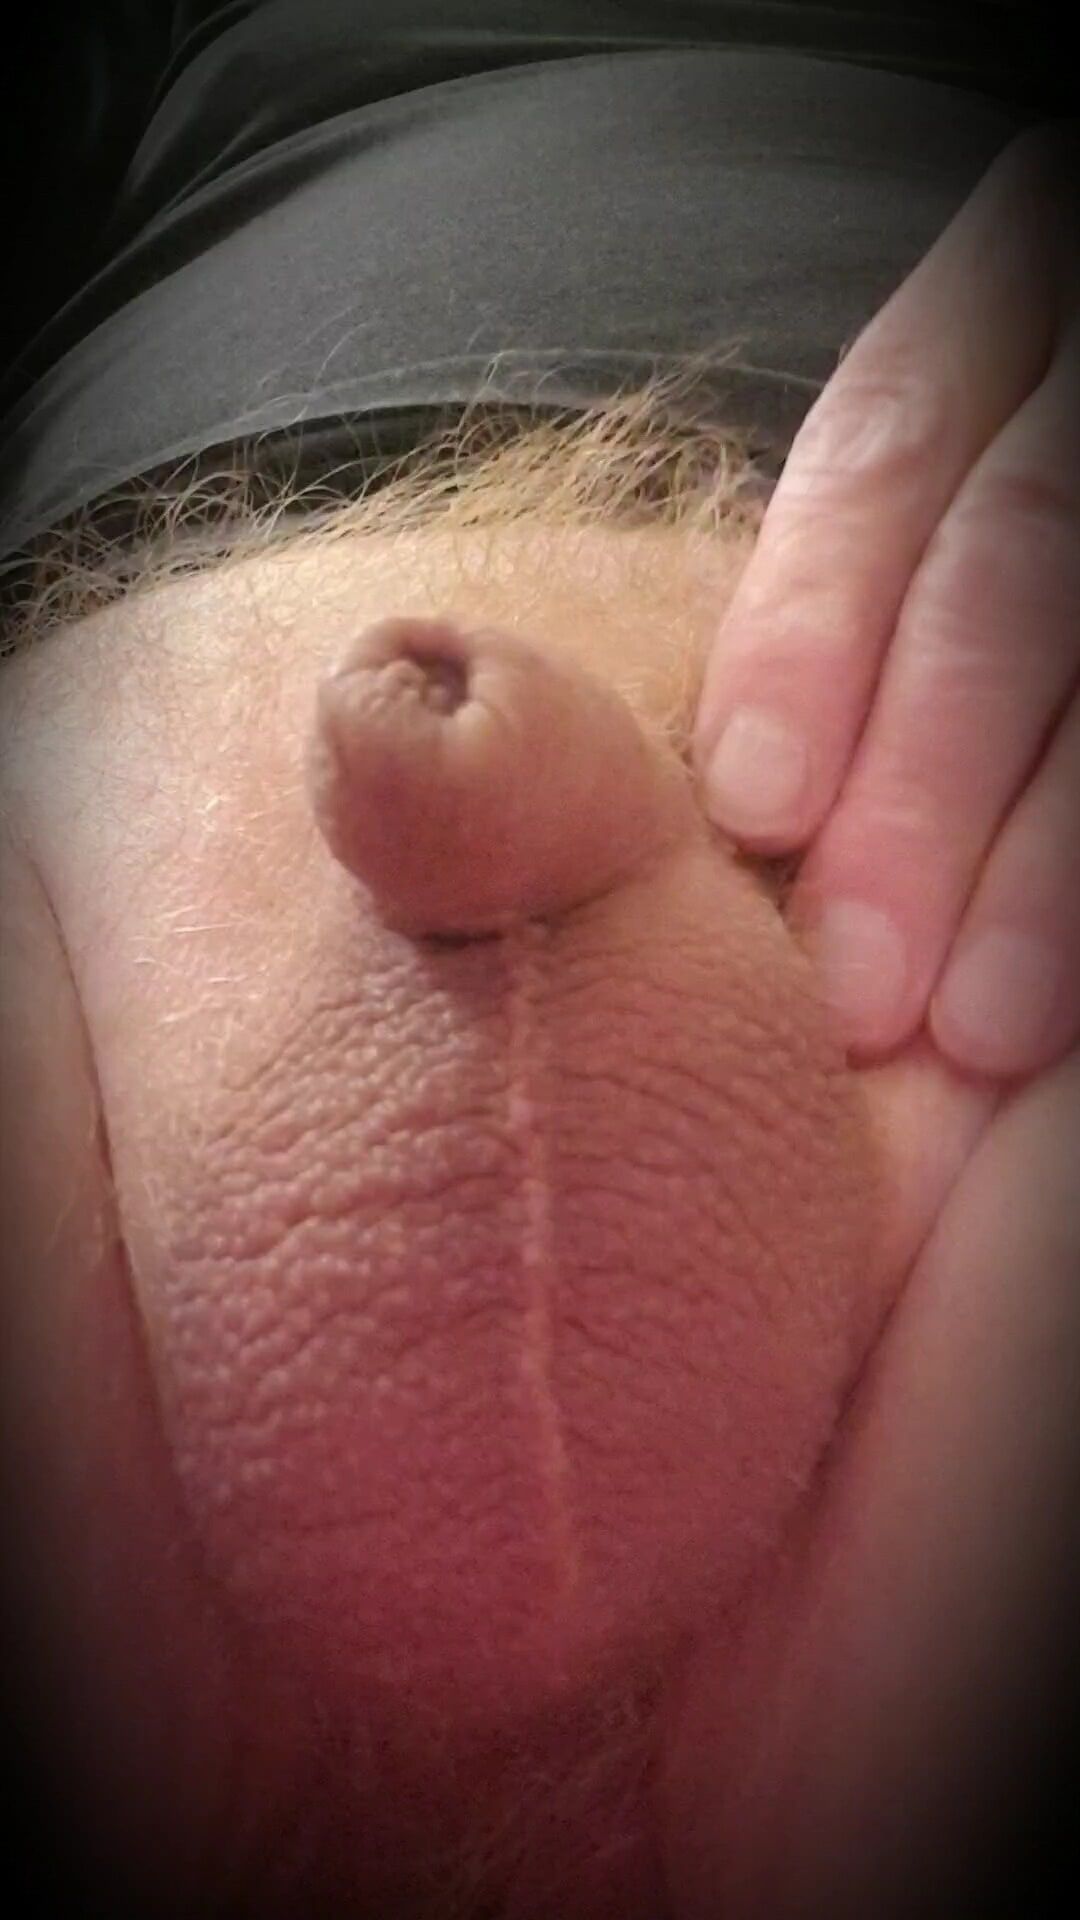 My tiny dick,shaved balls